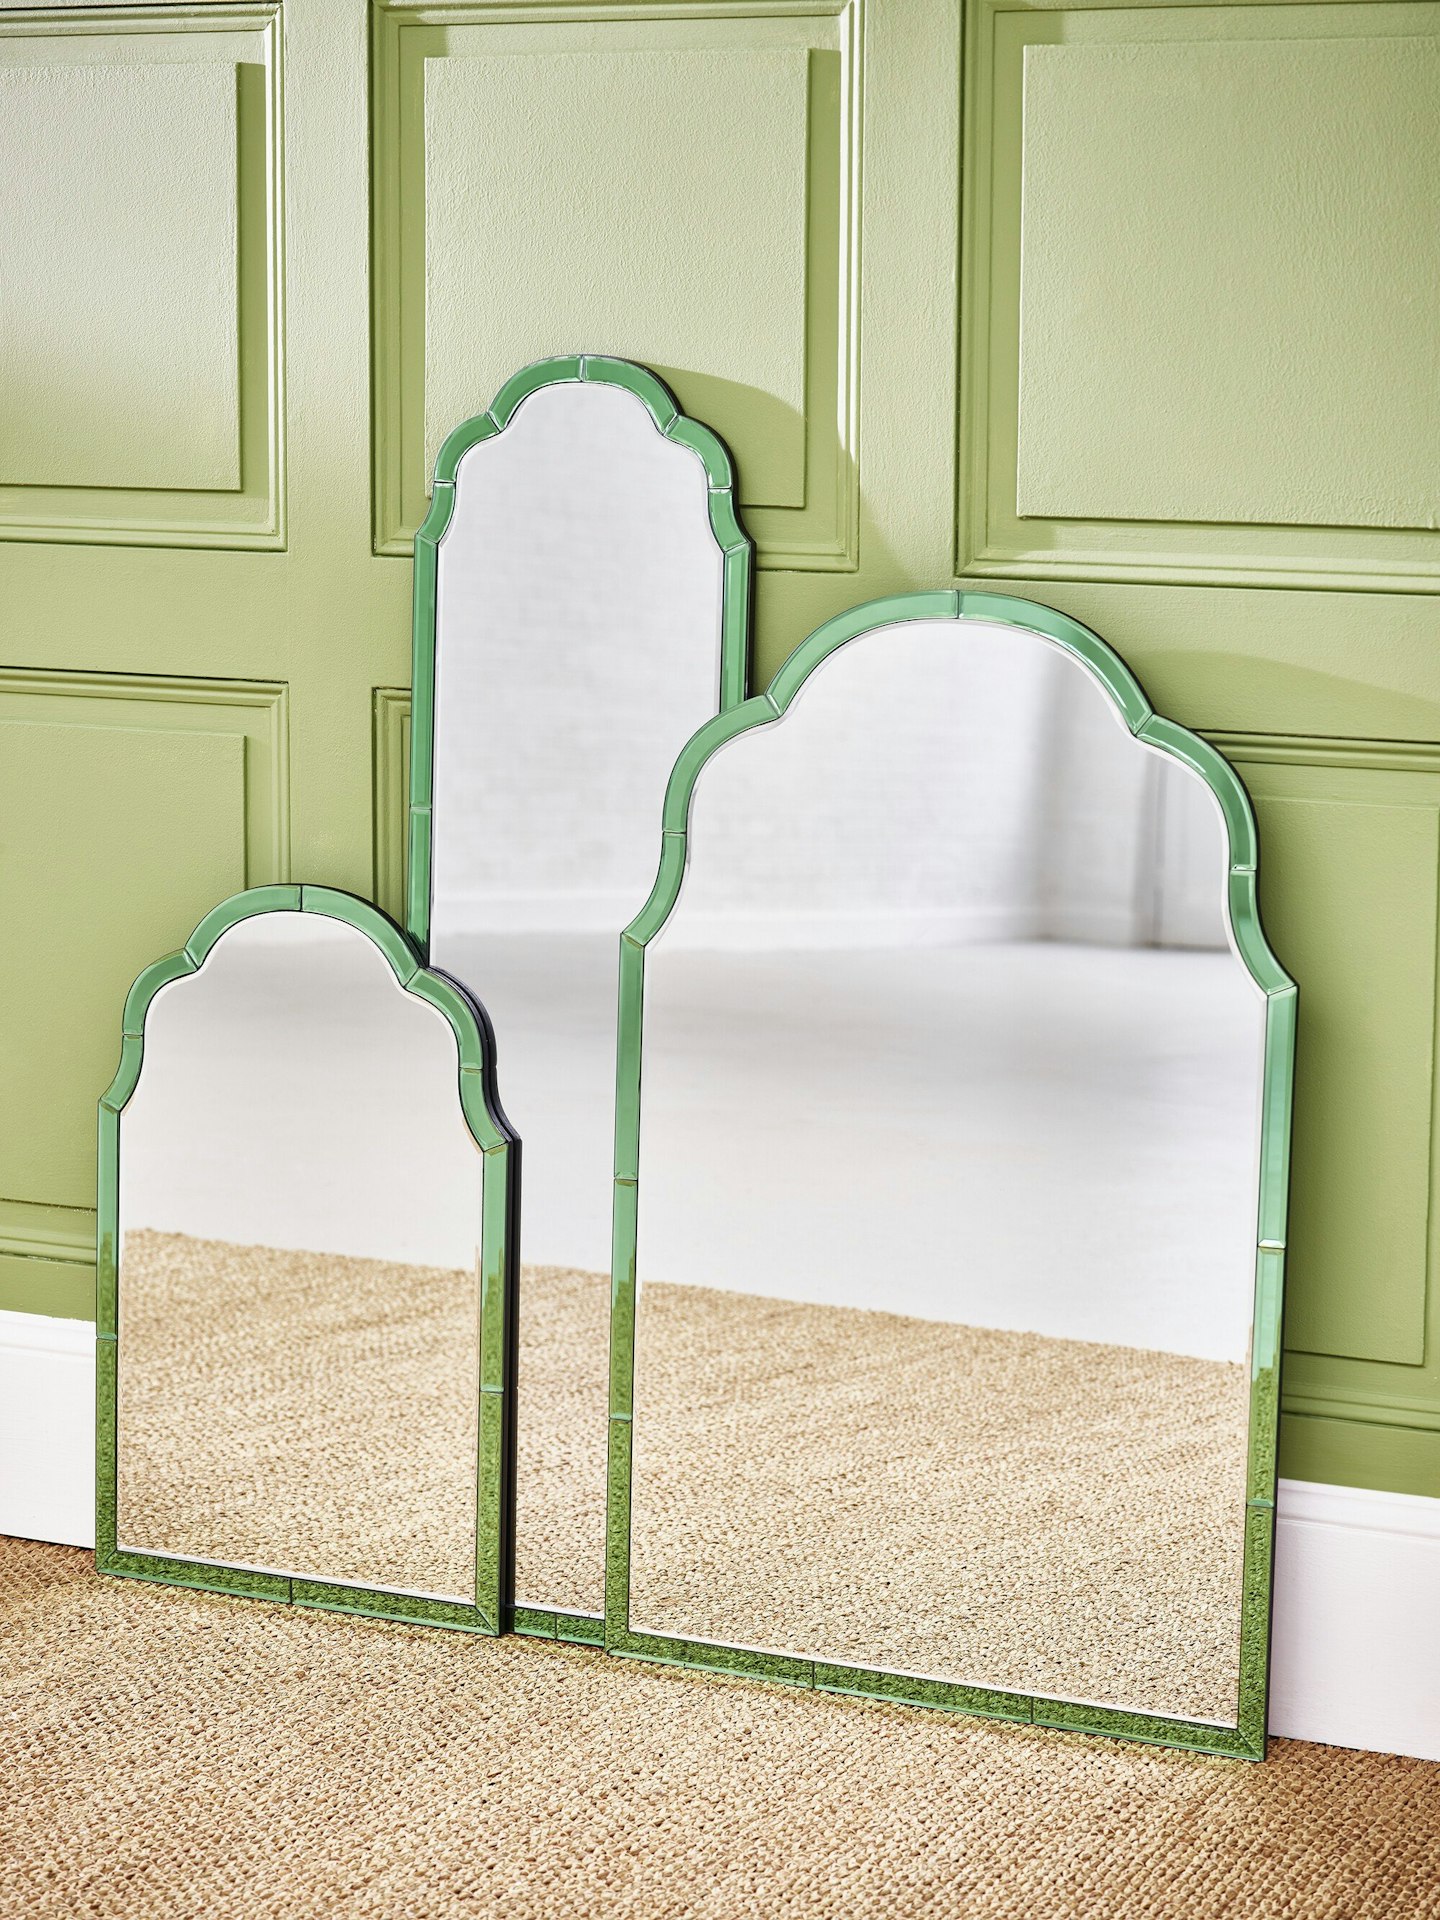 Oliver Bonas, Aurora Green Glass Wall Mirror, £125